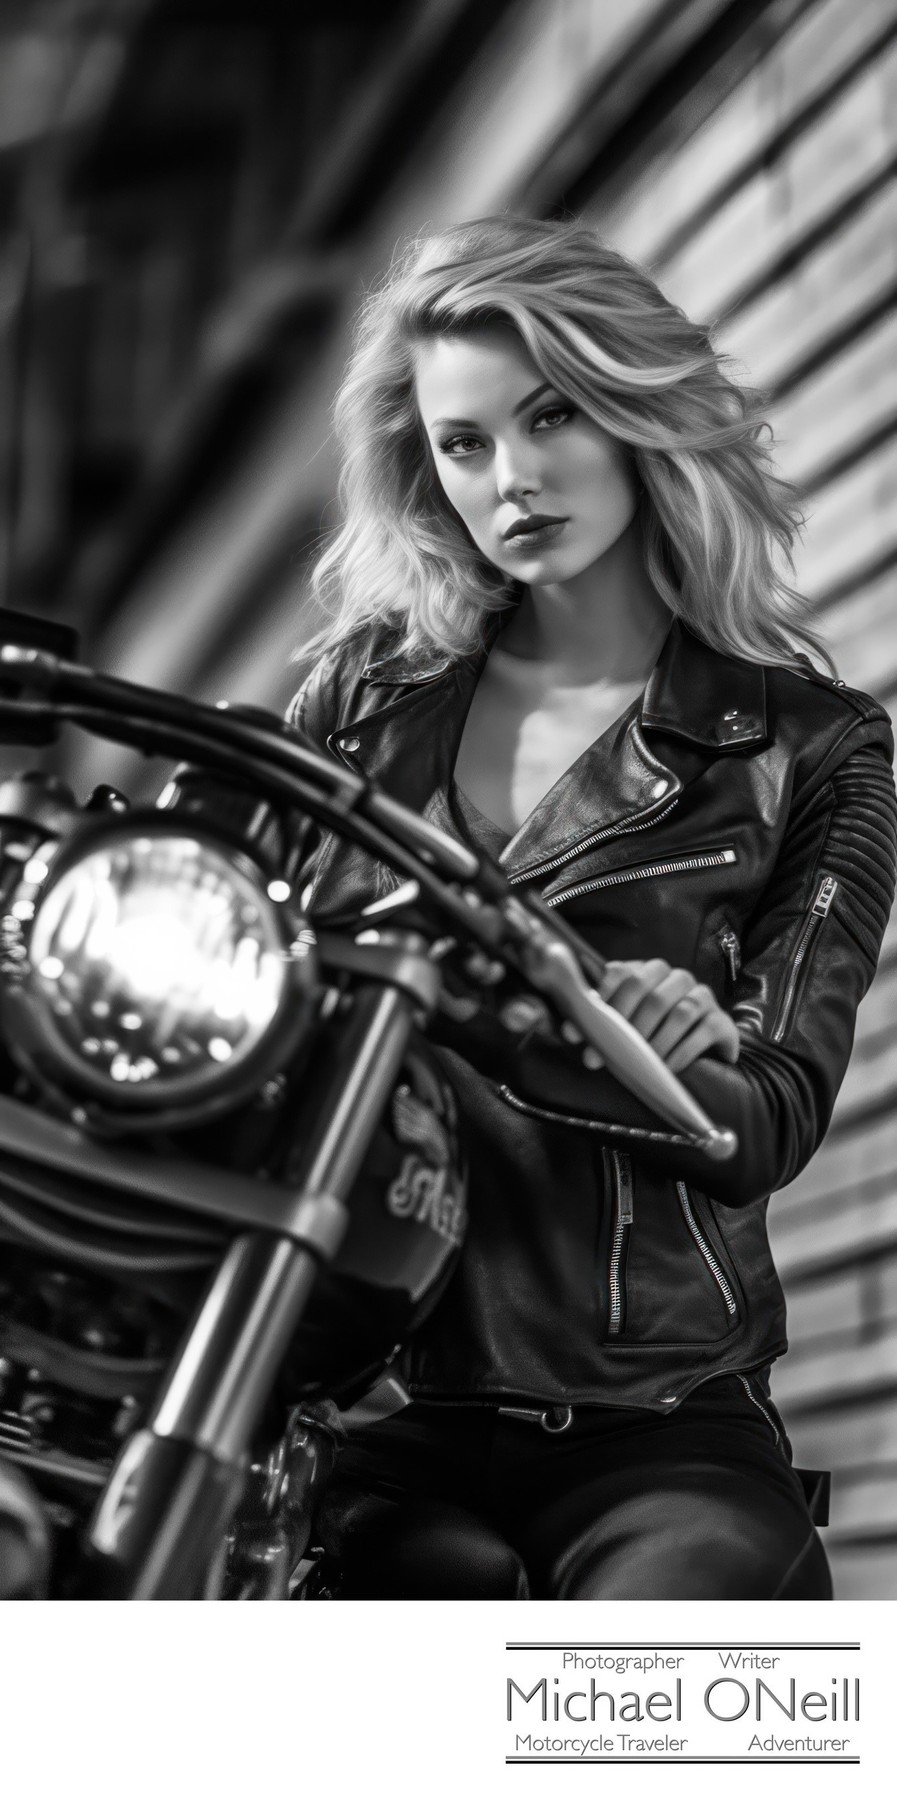 Black & White Fashion Image Of Female Biker In Leather Jacket